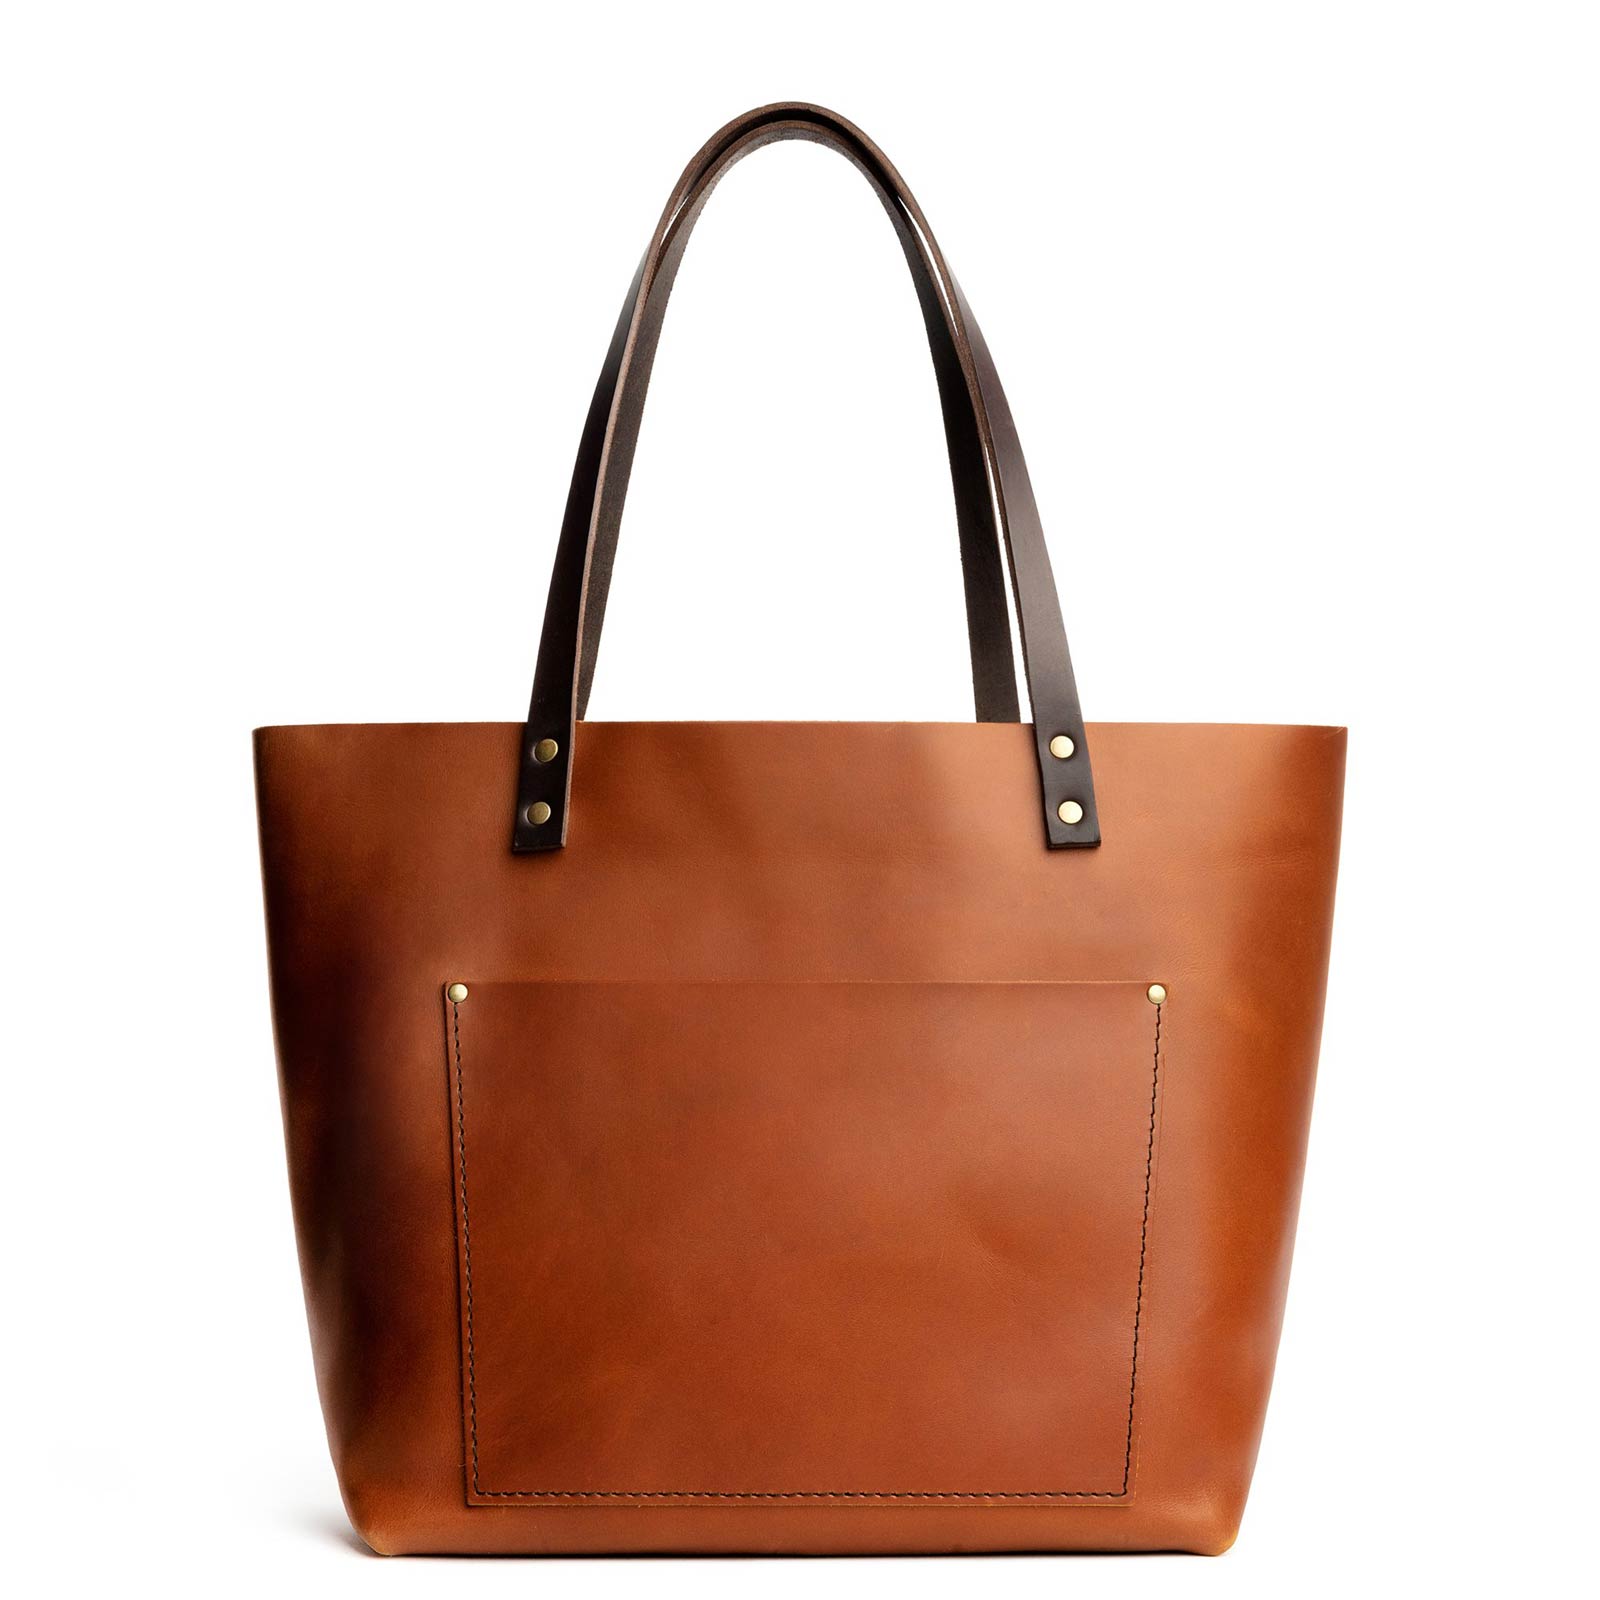 SMALL Classic In-Store Shopper Tote Bag